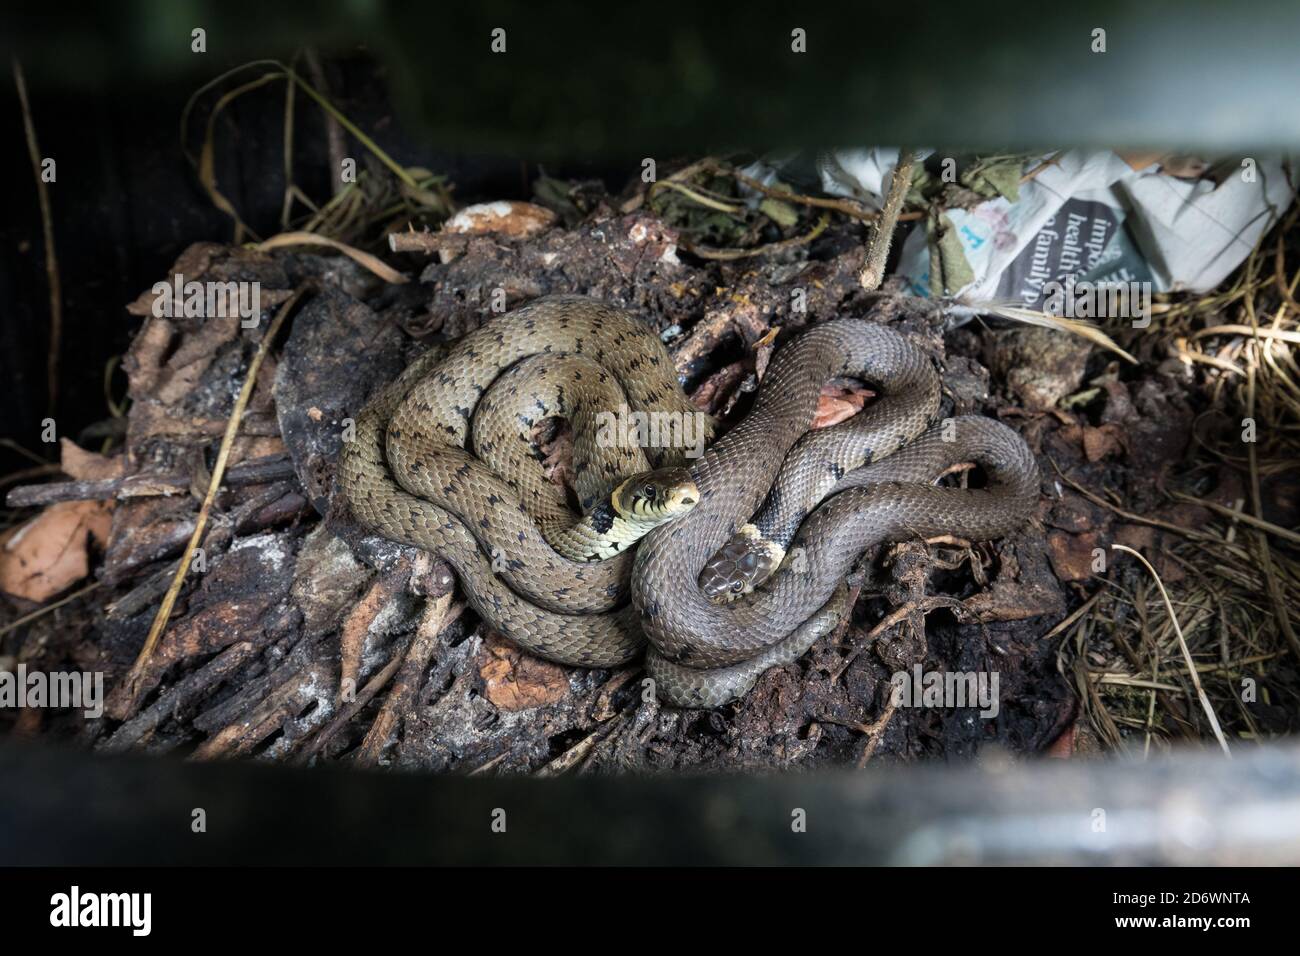 Grass snakes breeding in the compost bin, UK. Stock Photo